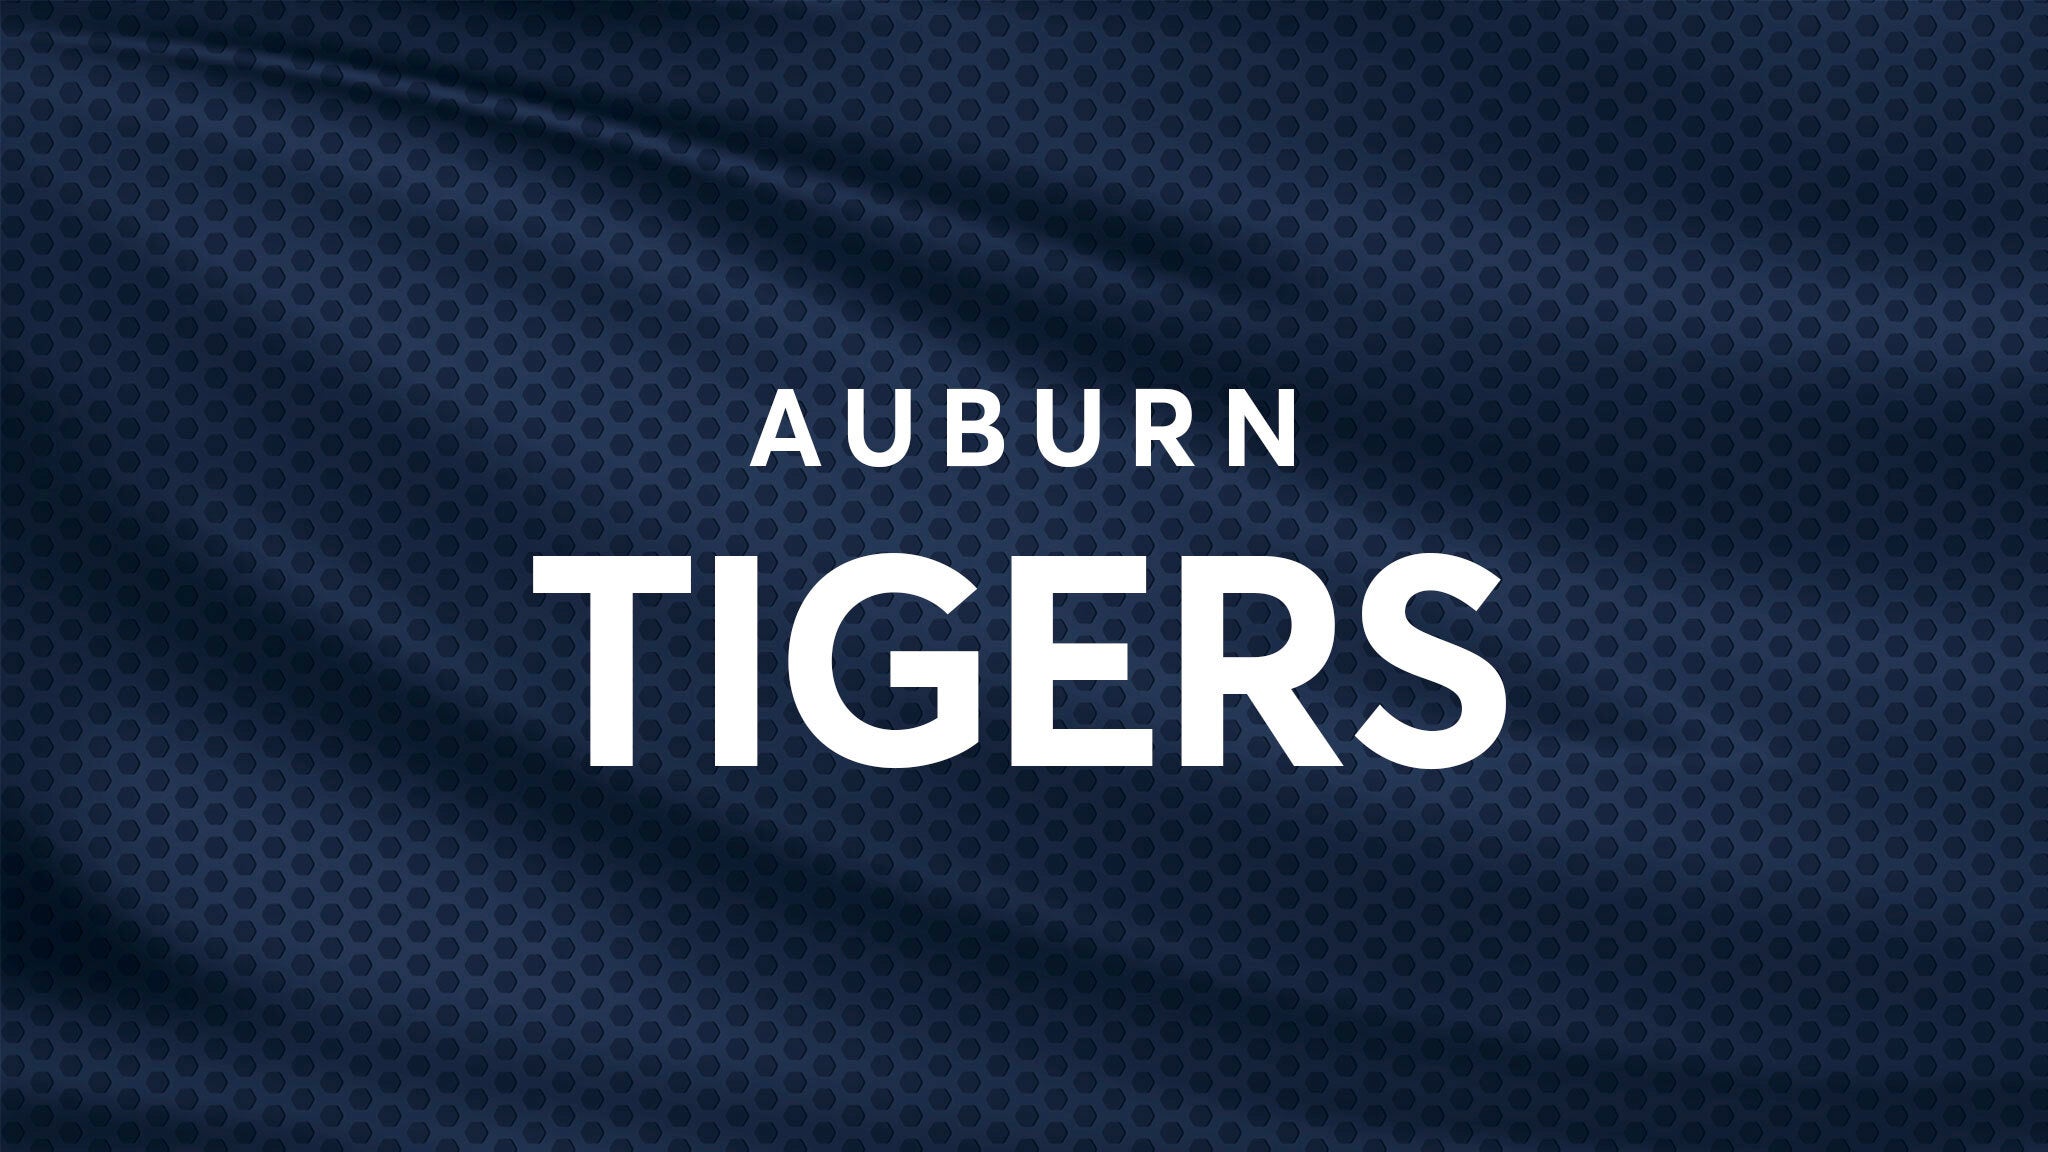 Auburn Tigers Football vs. Arkansas Razorbacks Football hero